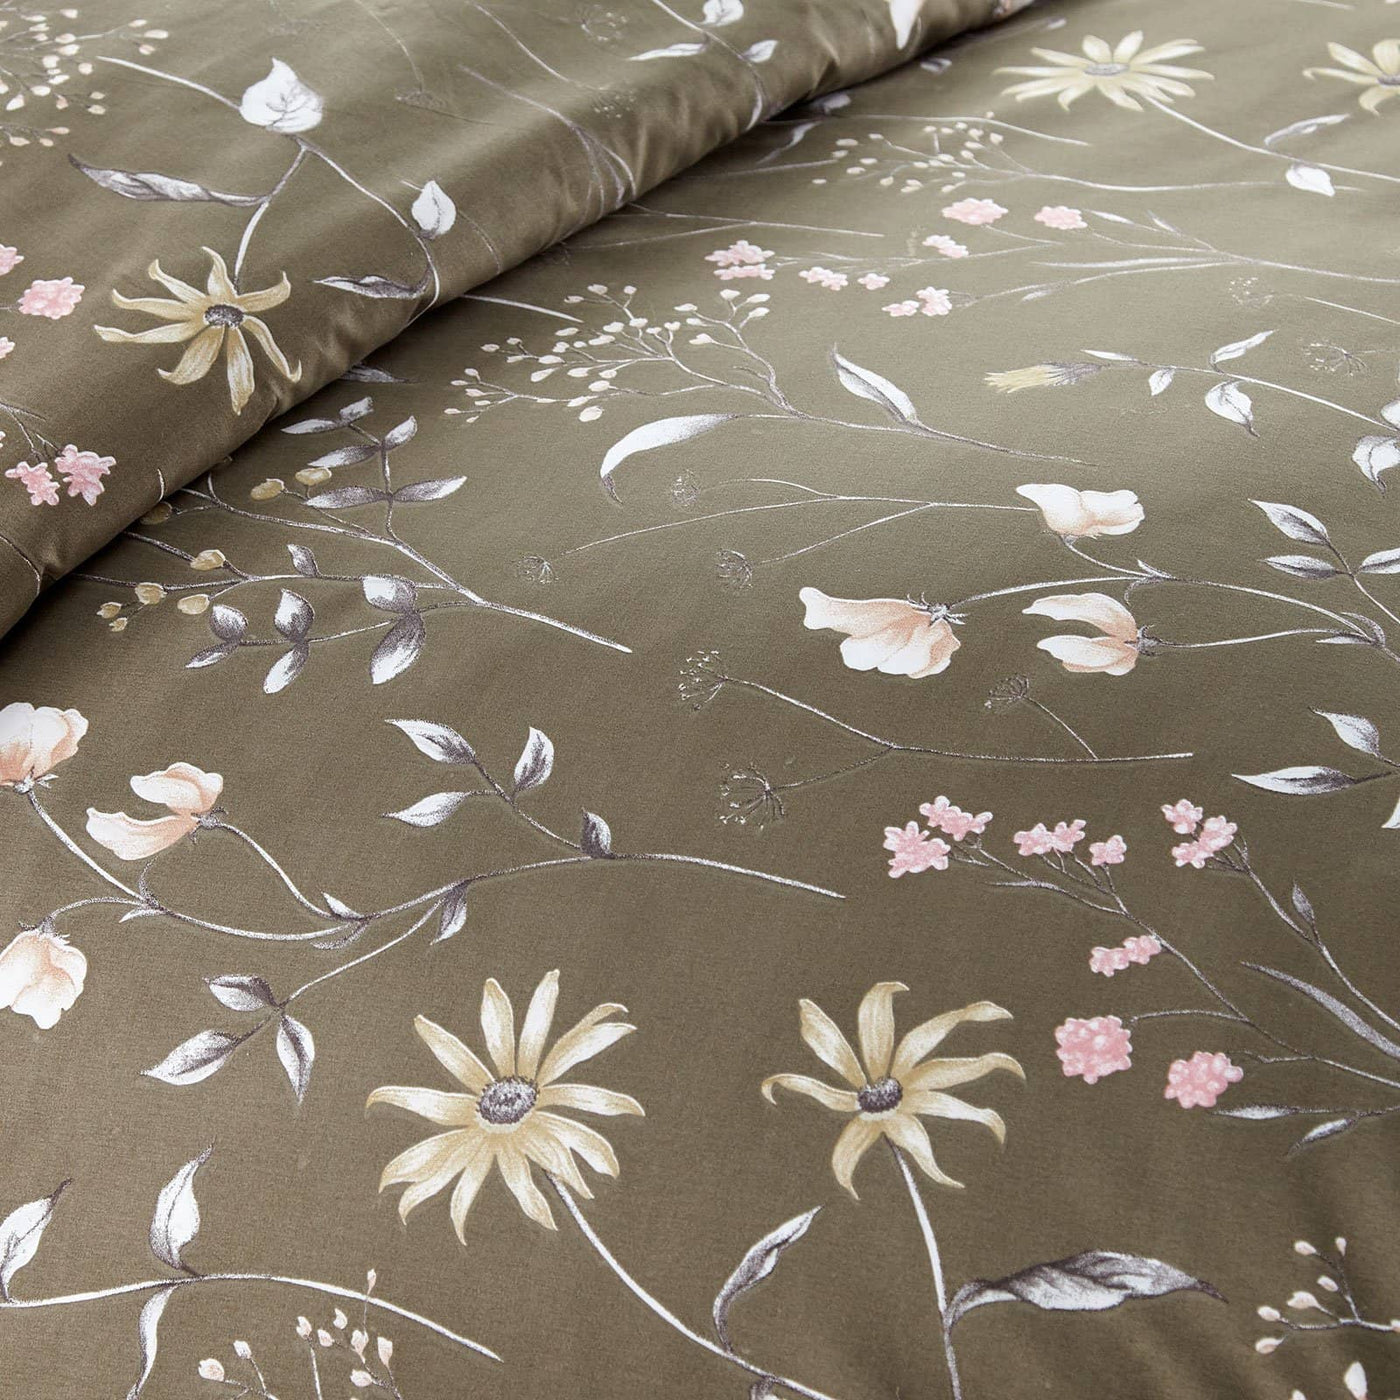 Details and Print Pattern of Secret Meadow Comforter Set in Olive Brown#color_secret-meadow-olive-brown